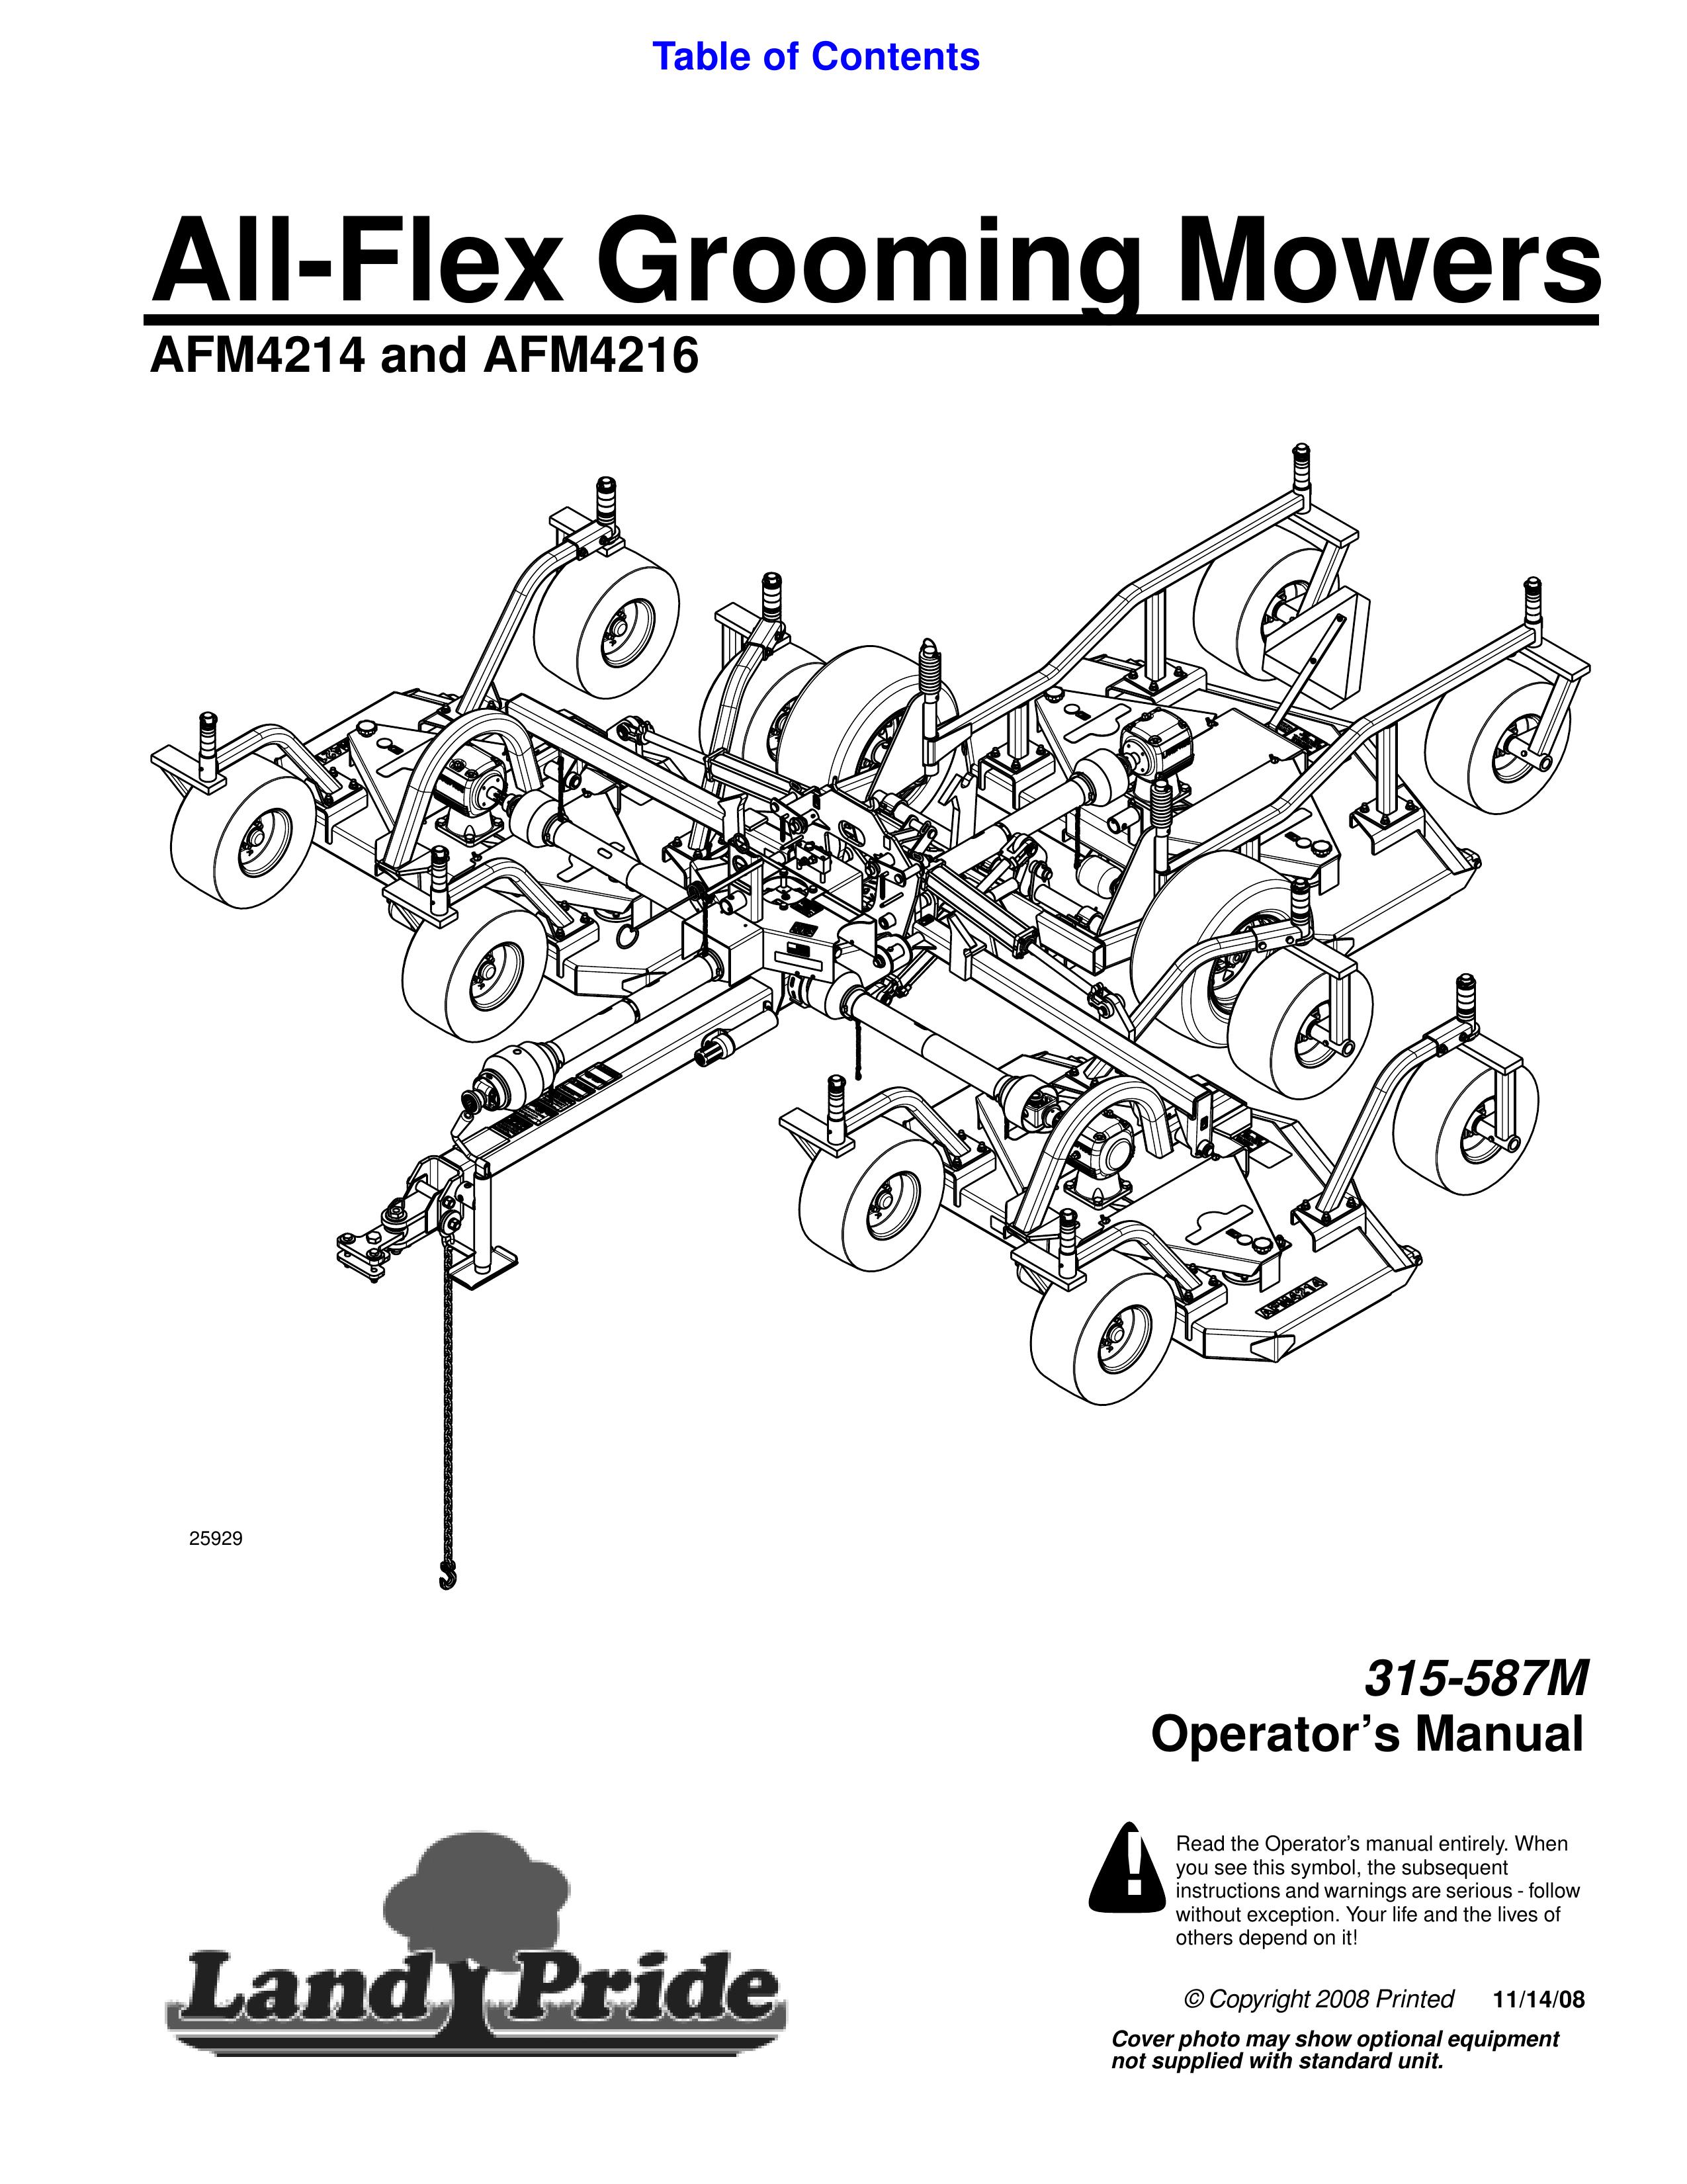 Land Pride AFM4214 Lawn Mower User Manual